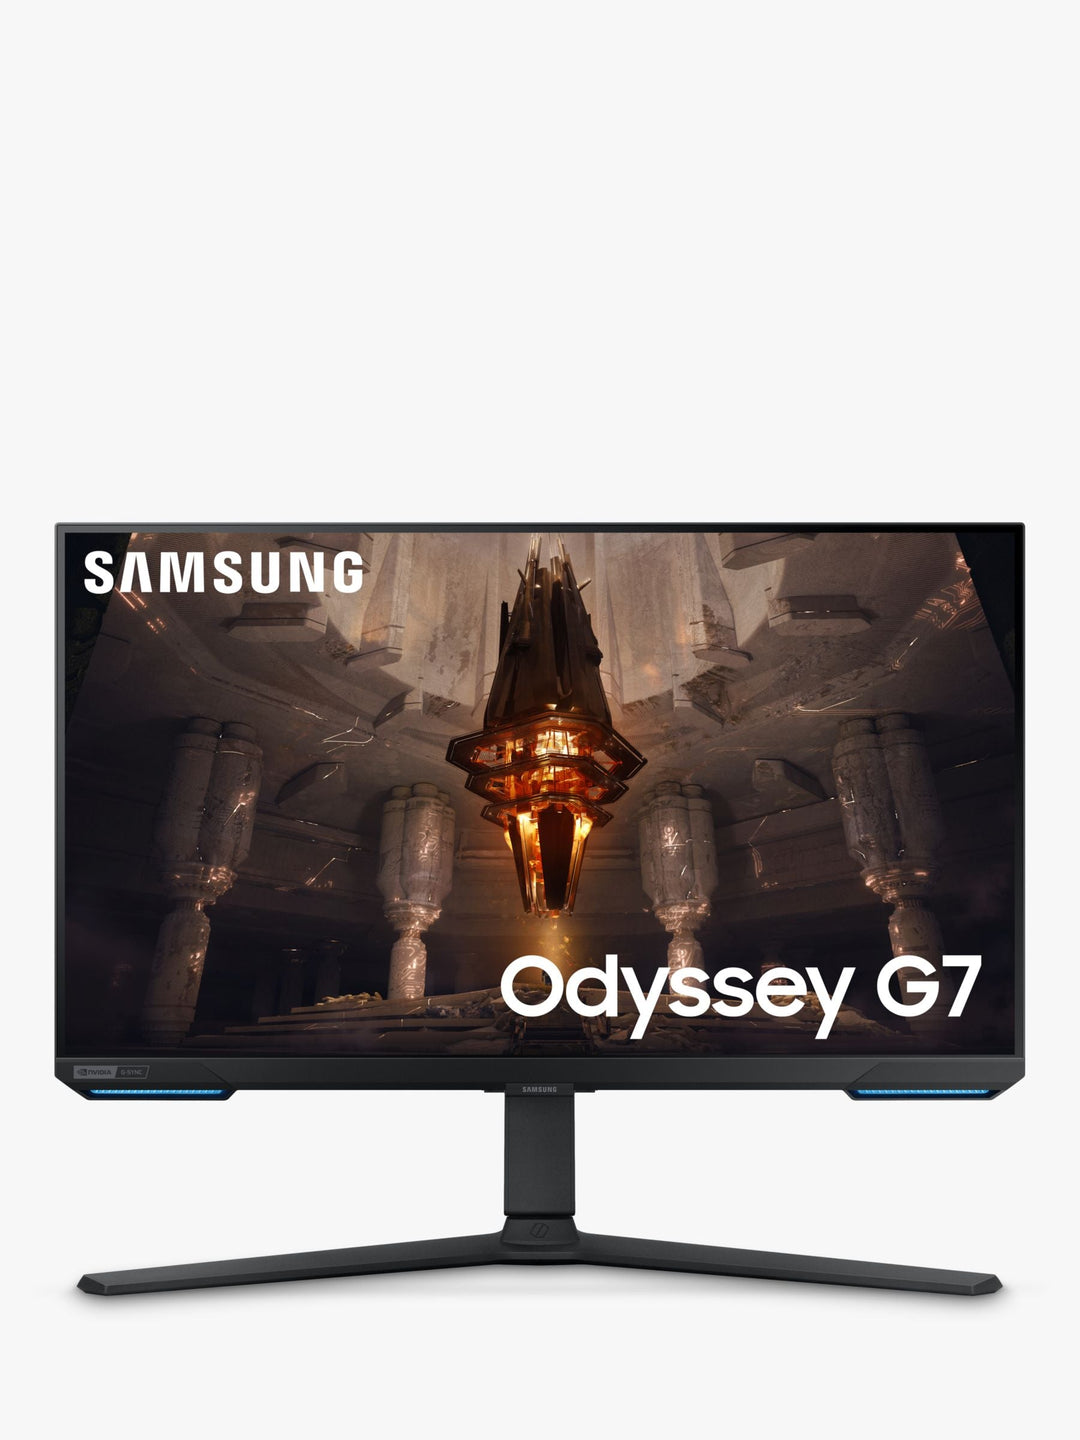 Samsung Odyssey G7 28” 4K UHD Gaming Monitor with 144Hz Refresh Rate, 1ms Response Time, Adjustable Ergonomic Design, AMD Freesync, G-Sync, HDMI 2.1